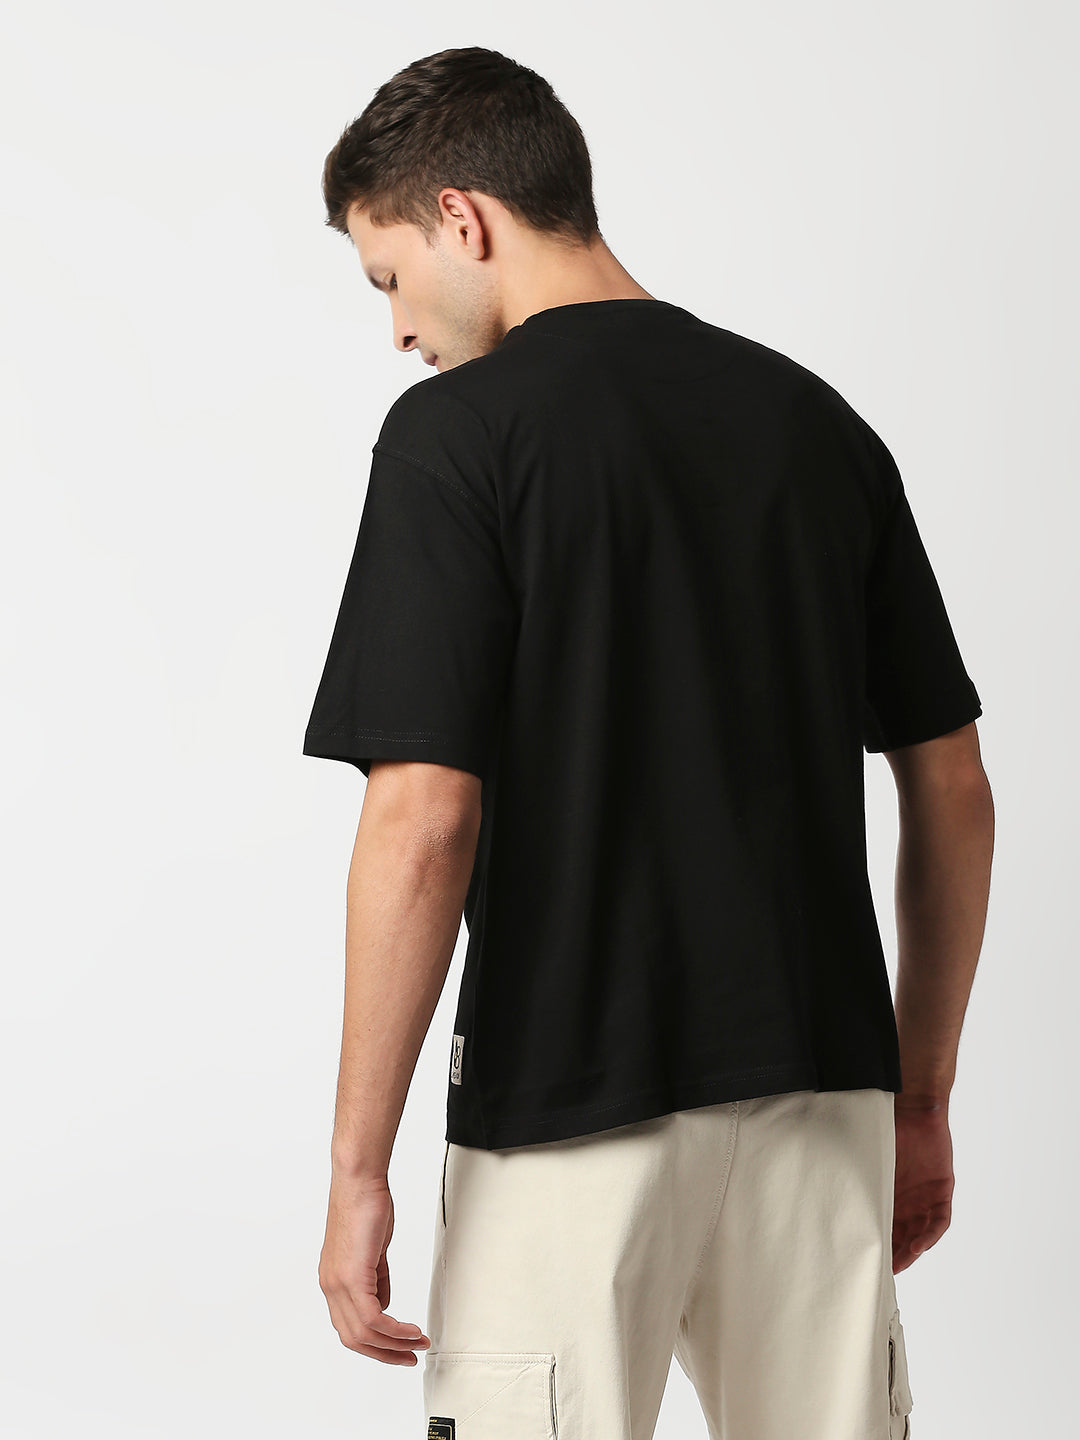 Buy Blamblack Men's Baggy Plain Black Color Oversized T Shirt